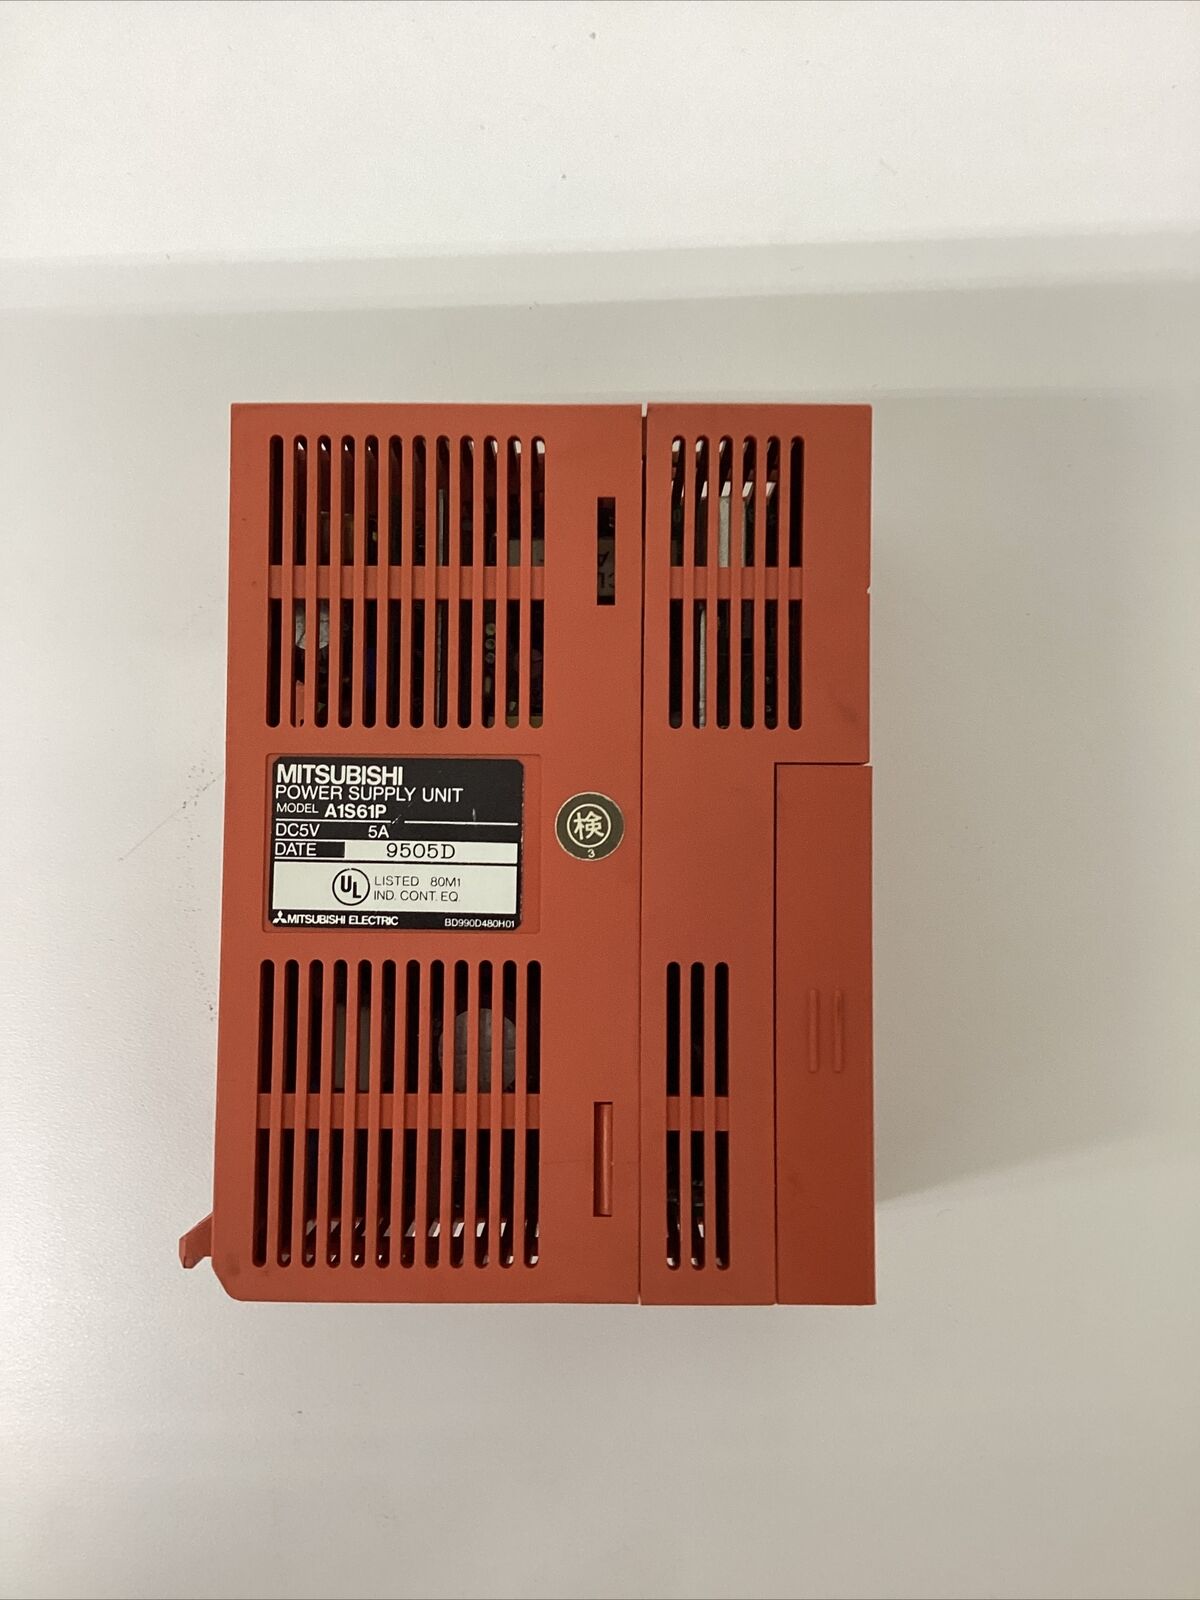 Mitsubishi  A1S61P  Power Supply 24 VDC 5 Amps (OV129)